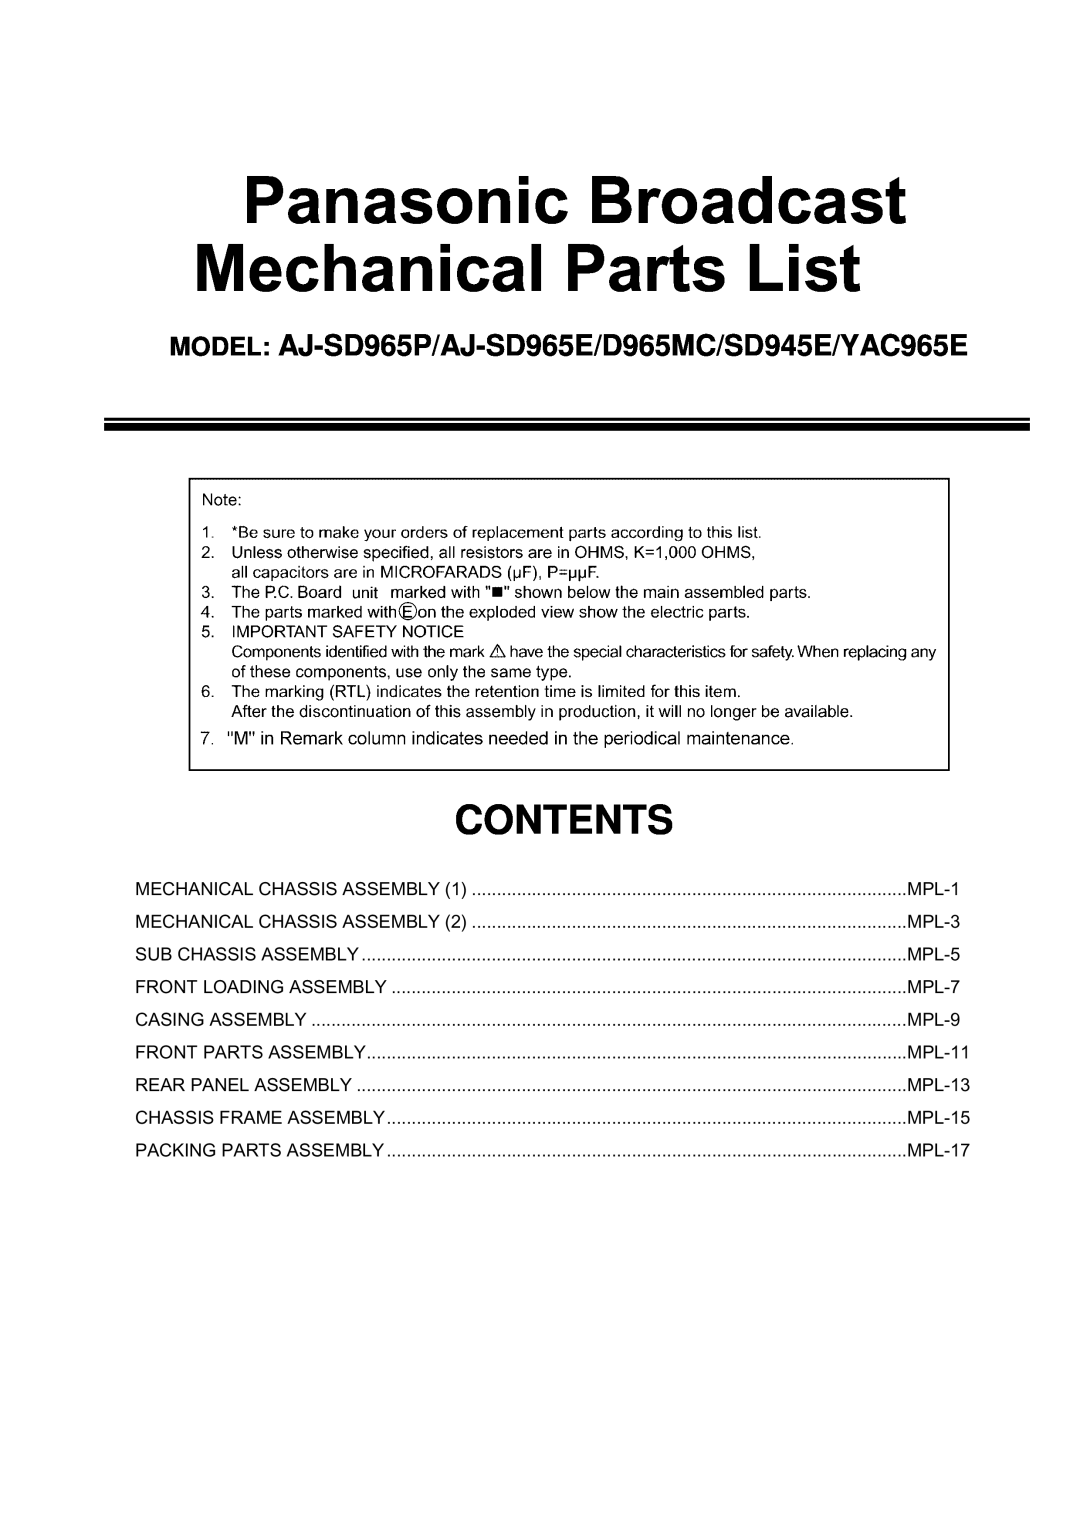 Panasonic AJ-SD945E manual Mechanical Chassis Assembly, MPL-5, MPL-7, MPL-9, MPL-11, MPL-13, MPL-15, MPL-17, Contents 